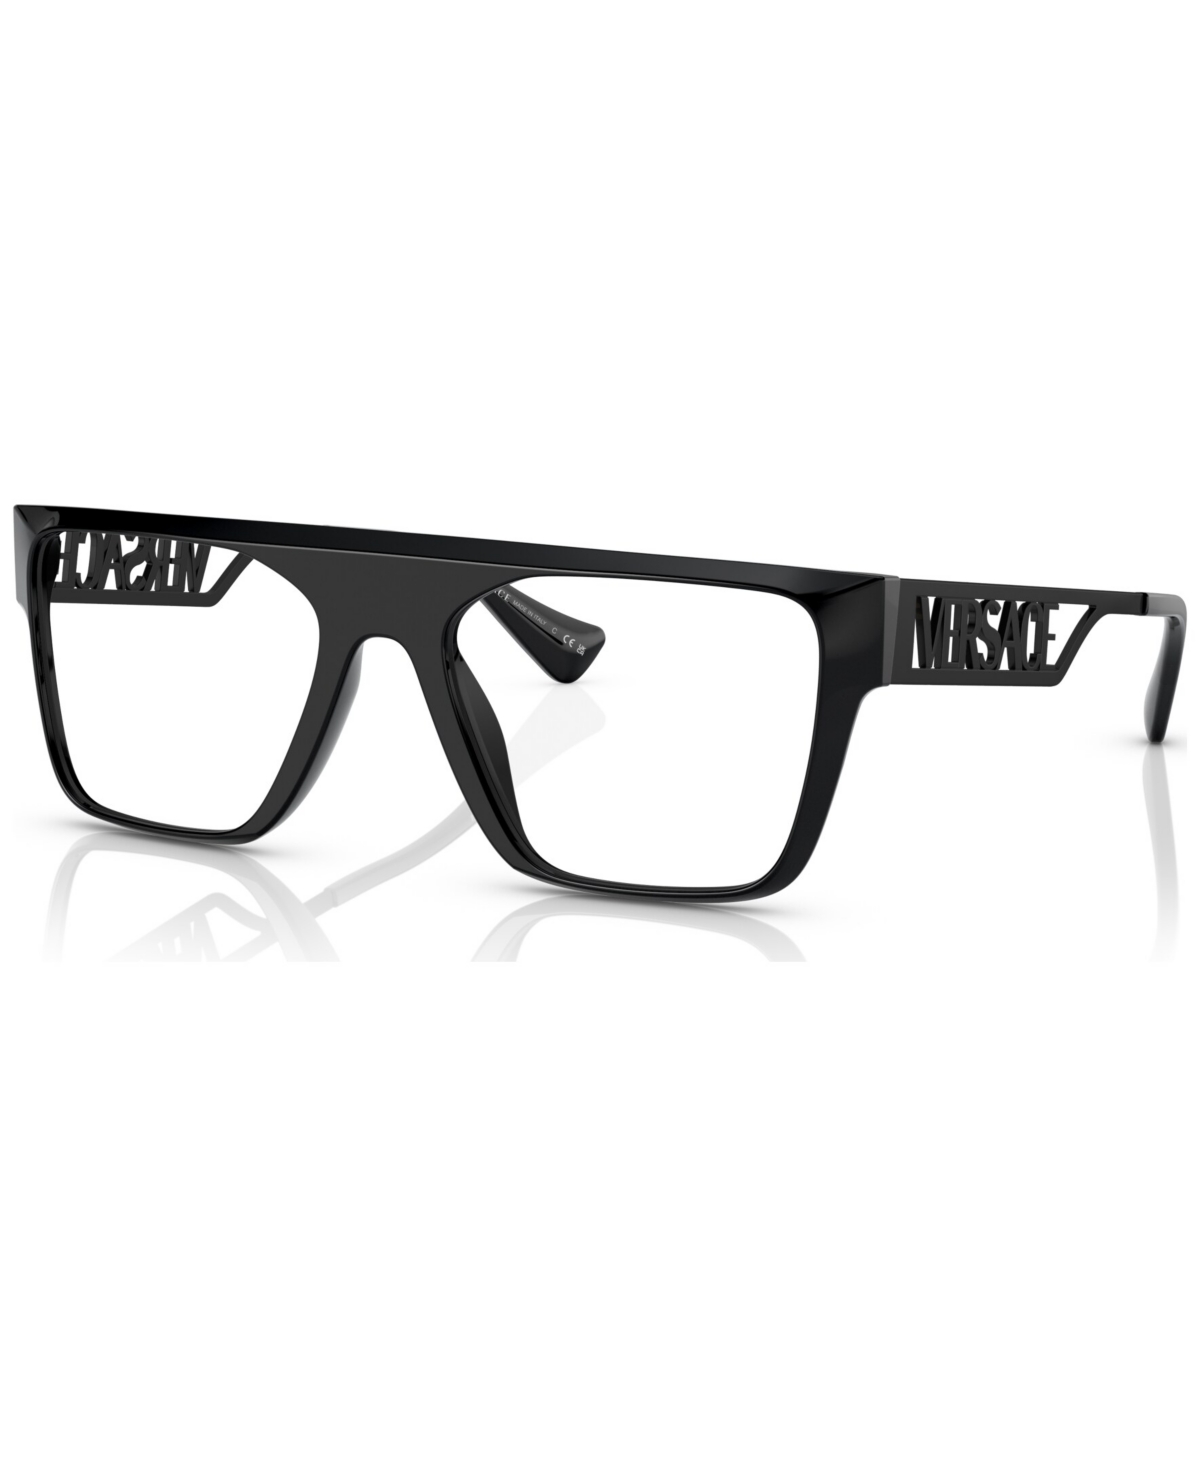 Men's Rectangle Eyeglasses, VE3326U55-x - Black